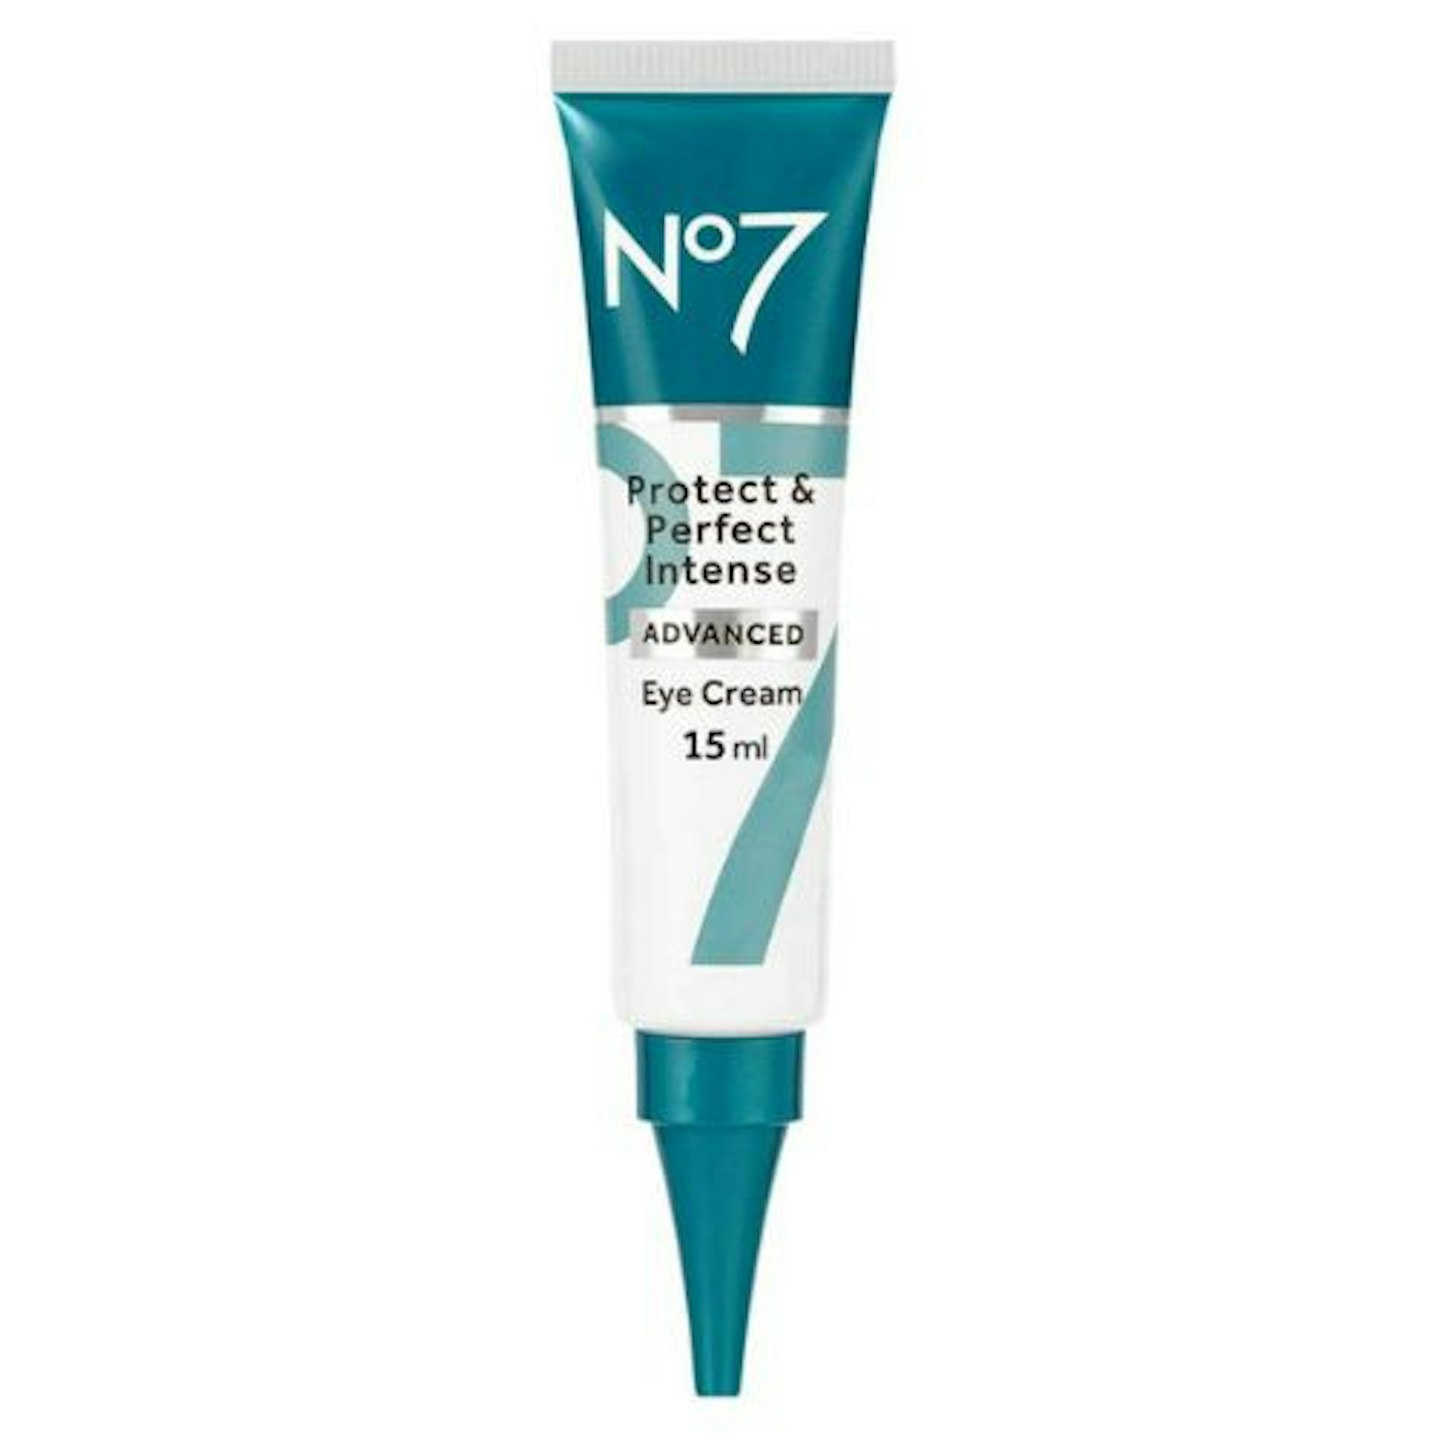 No7 Protect & Perfect Intense Eye Cream